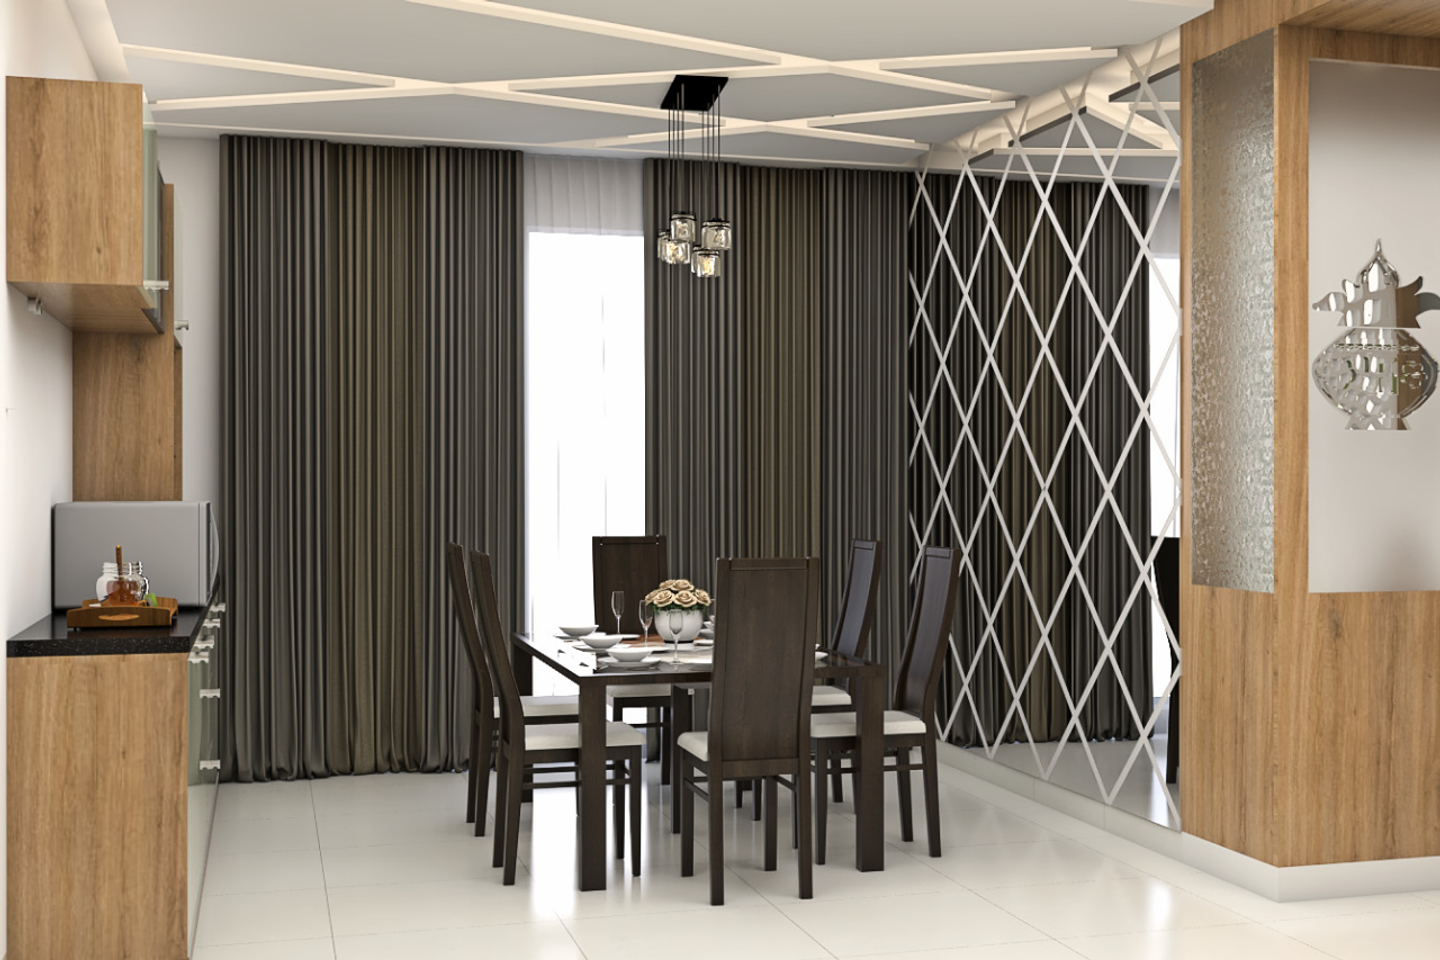 6 Seater Dining Room Design - Livspace